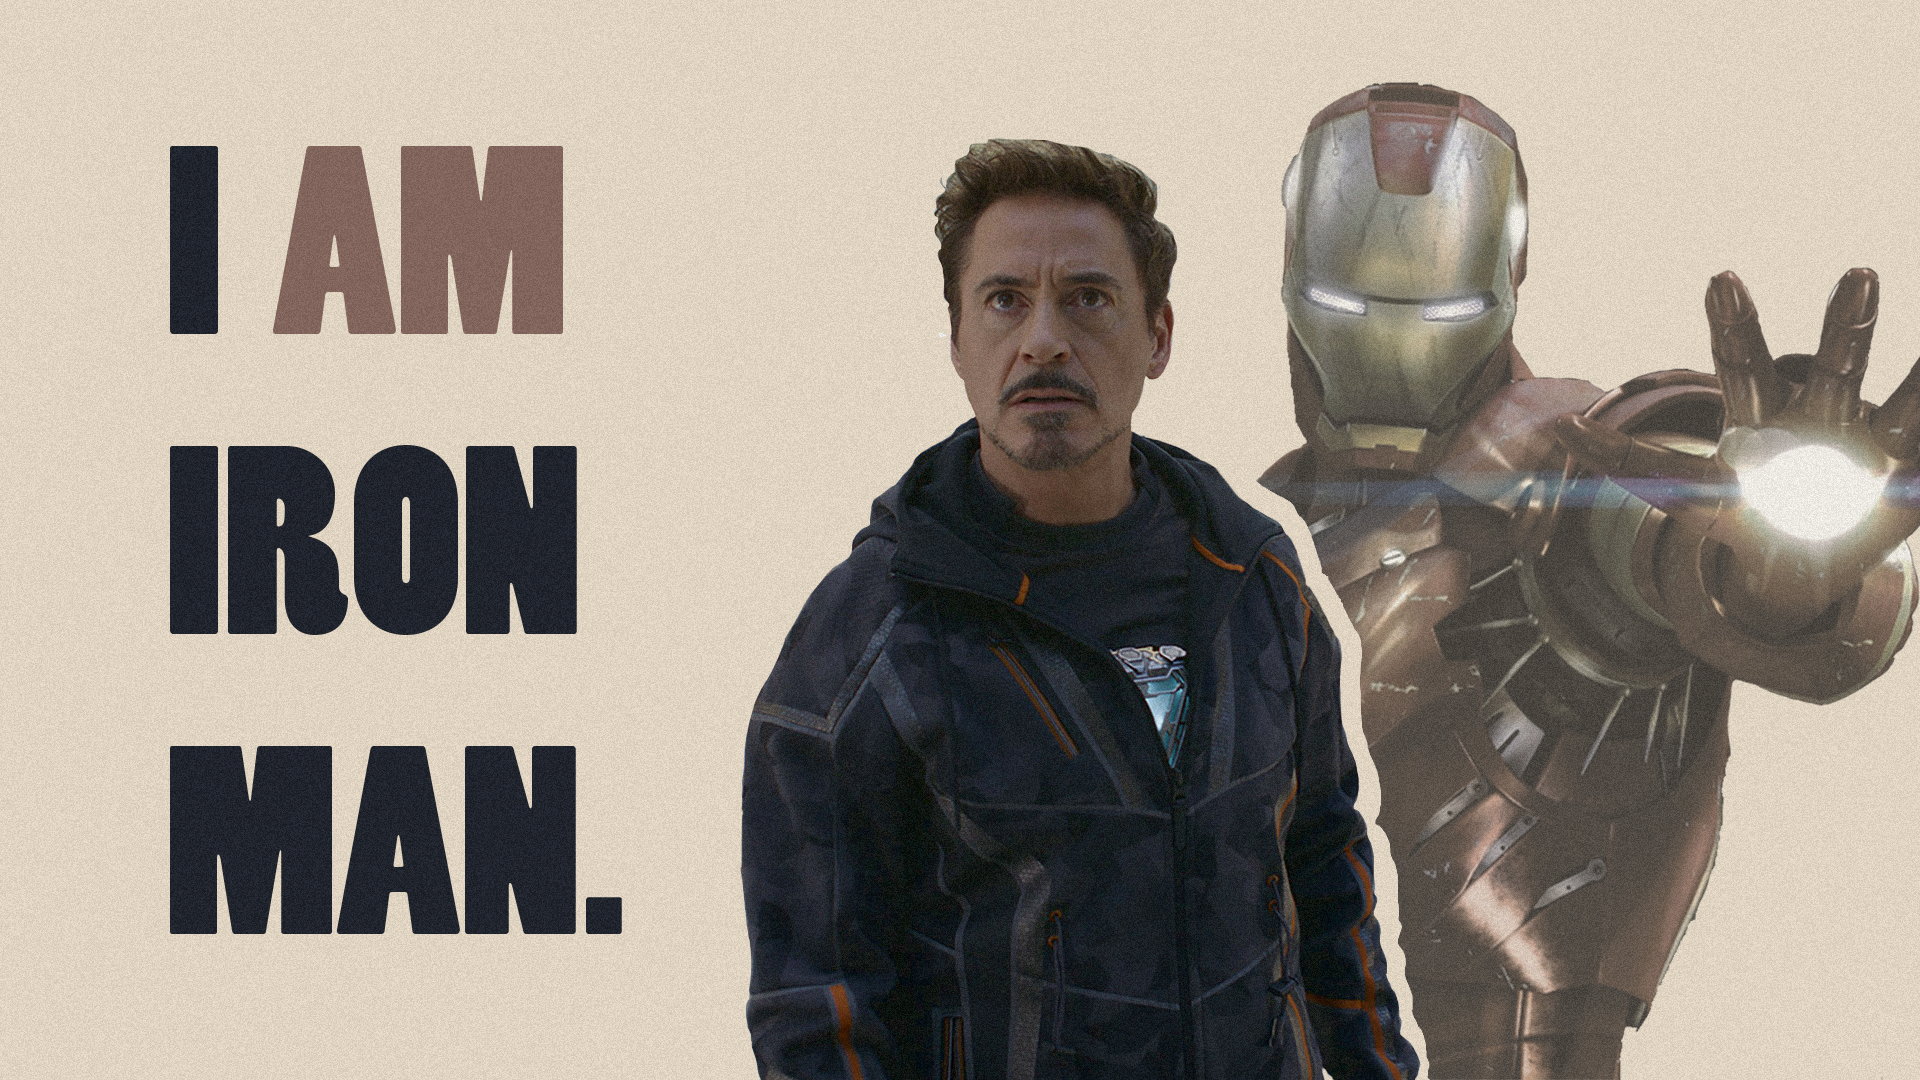 I am Iron Man. Tony stark wallpaper, Avengers wallpaper, Cute mobile wallpaper